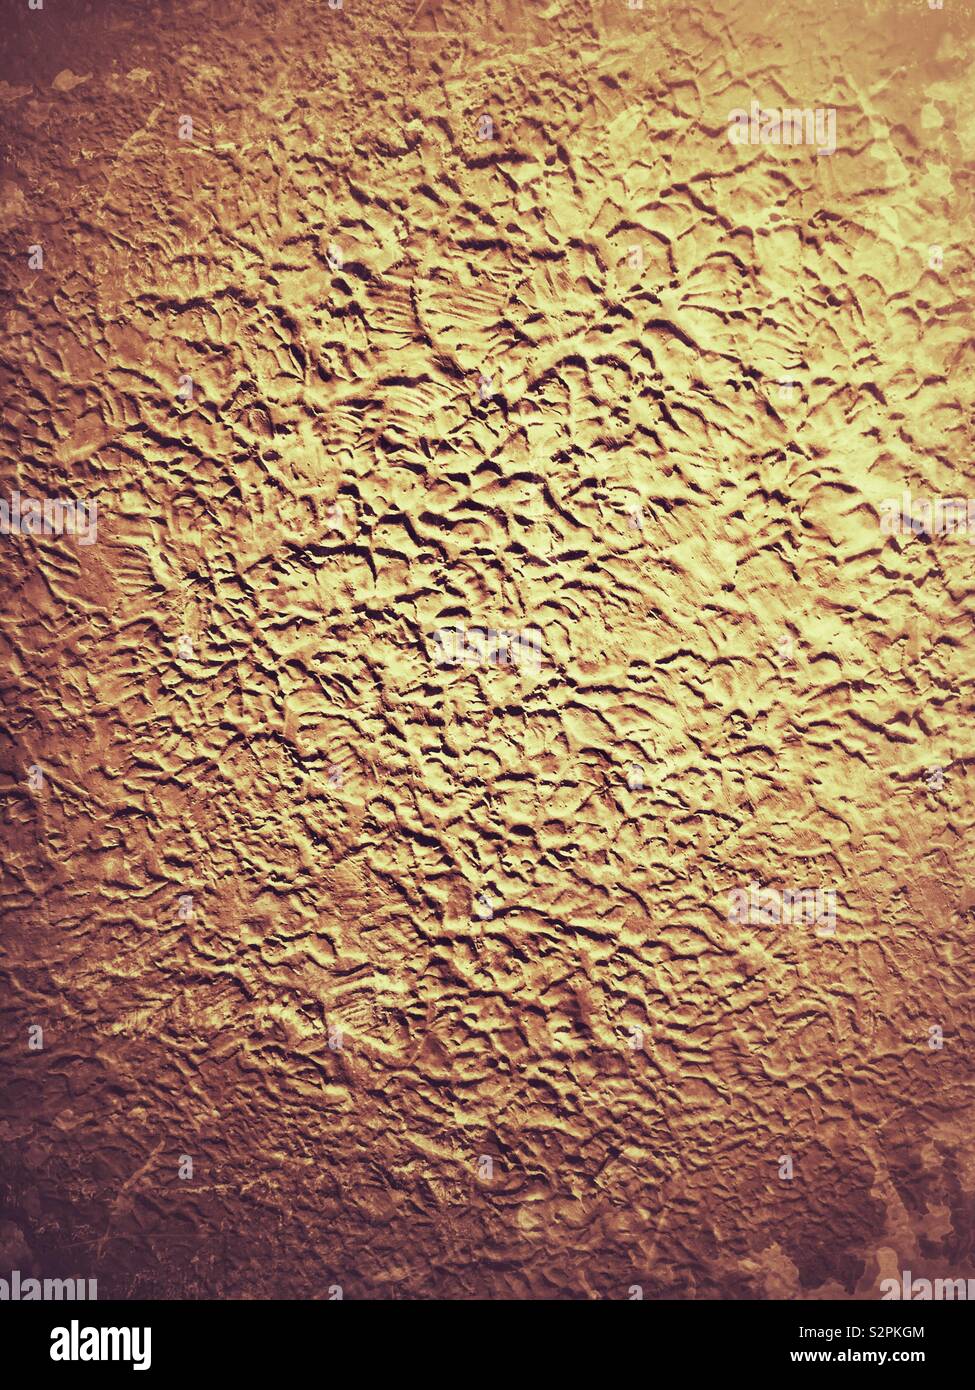 Stipple textura superficial sobre una antigua pared de estuco de cemento pintada de un color marrón dorado. Foto de stock